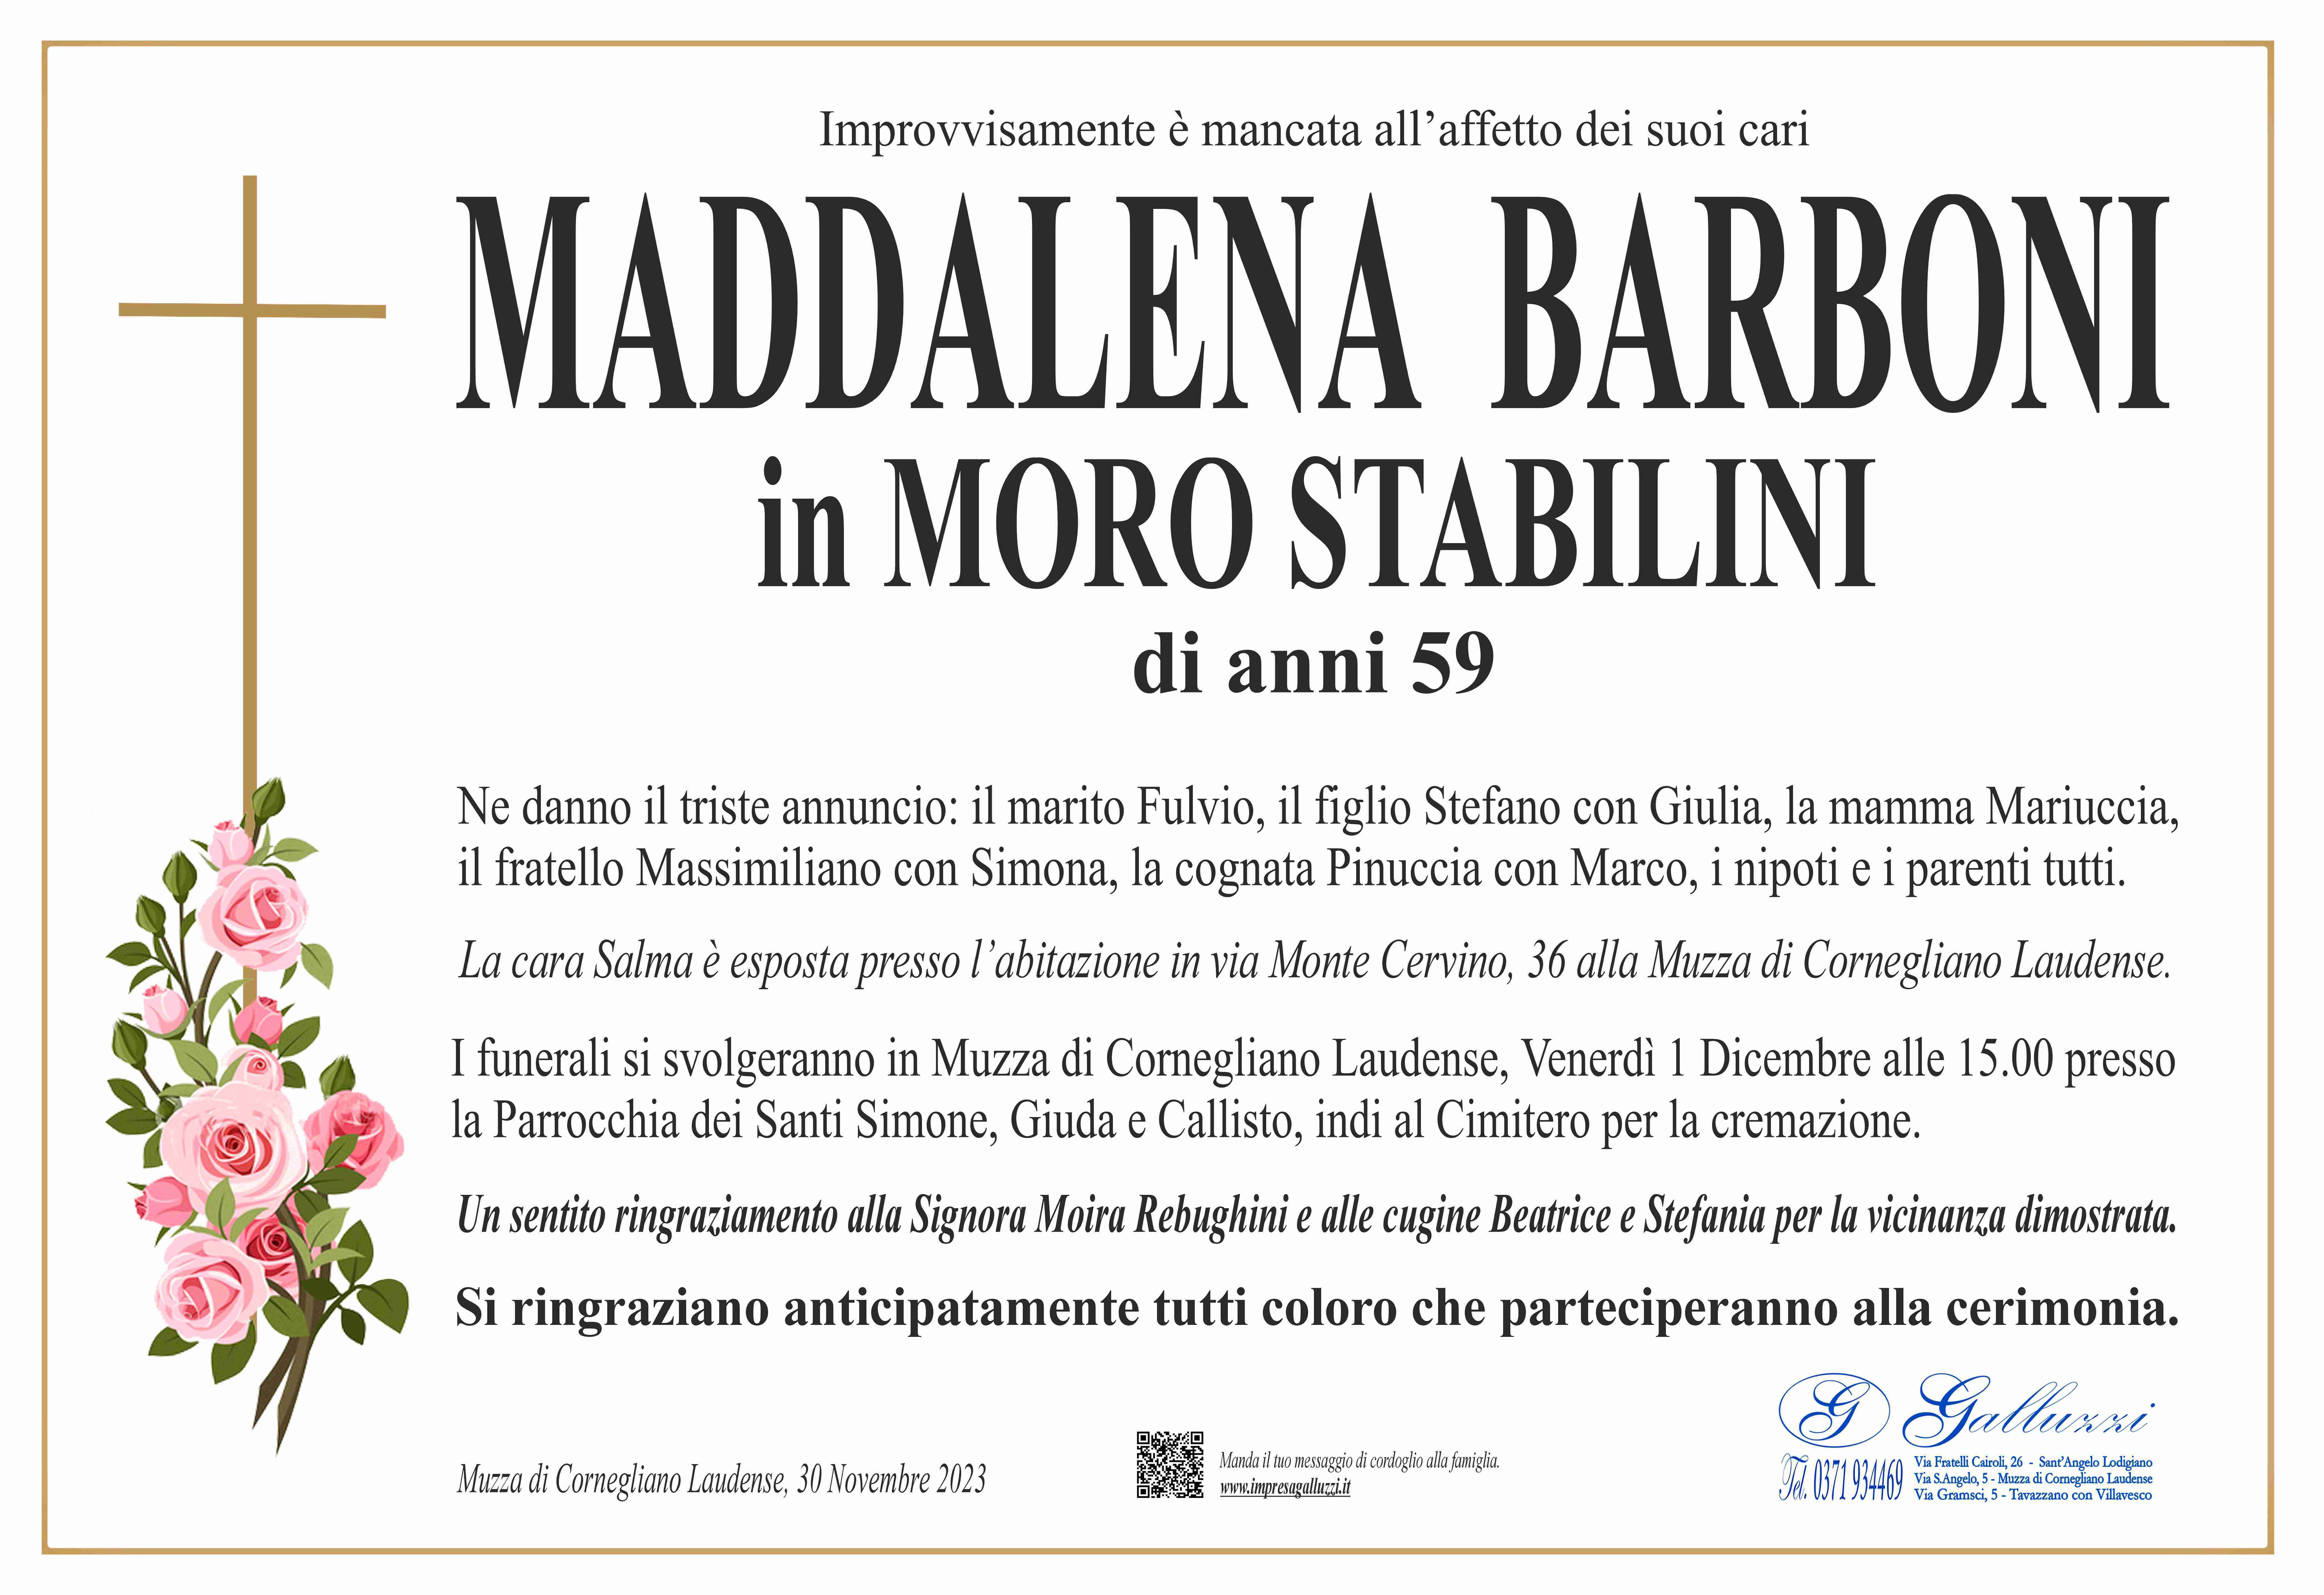 Maddalena Barboni